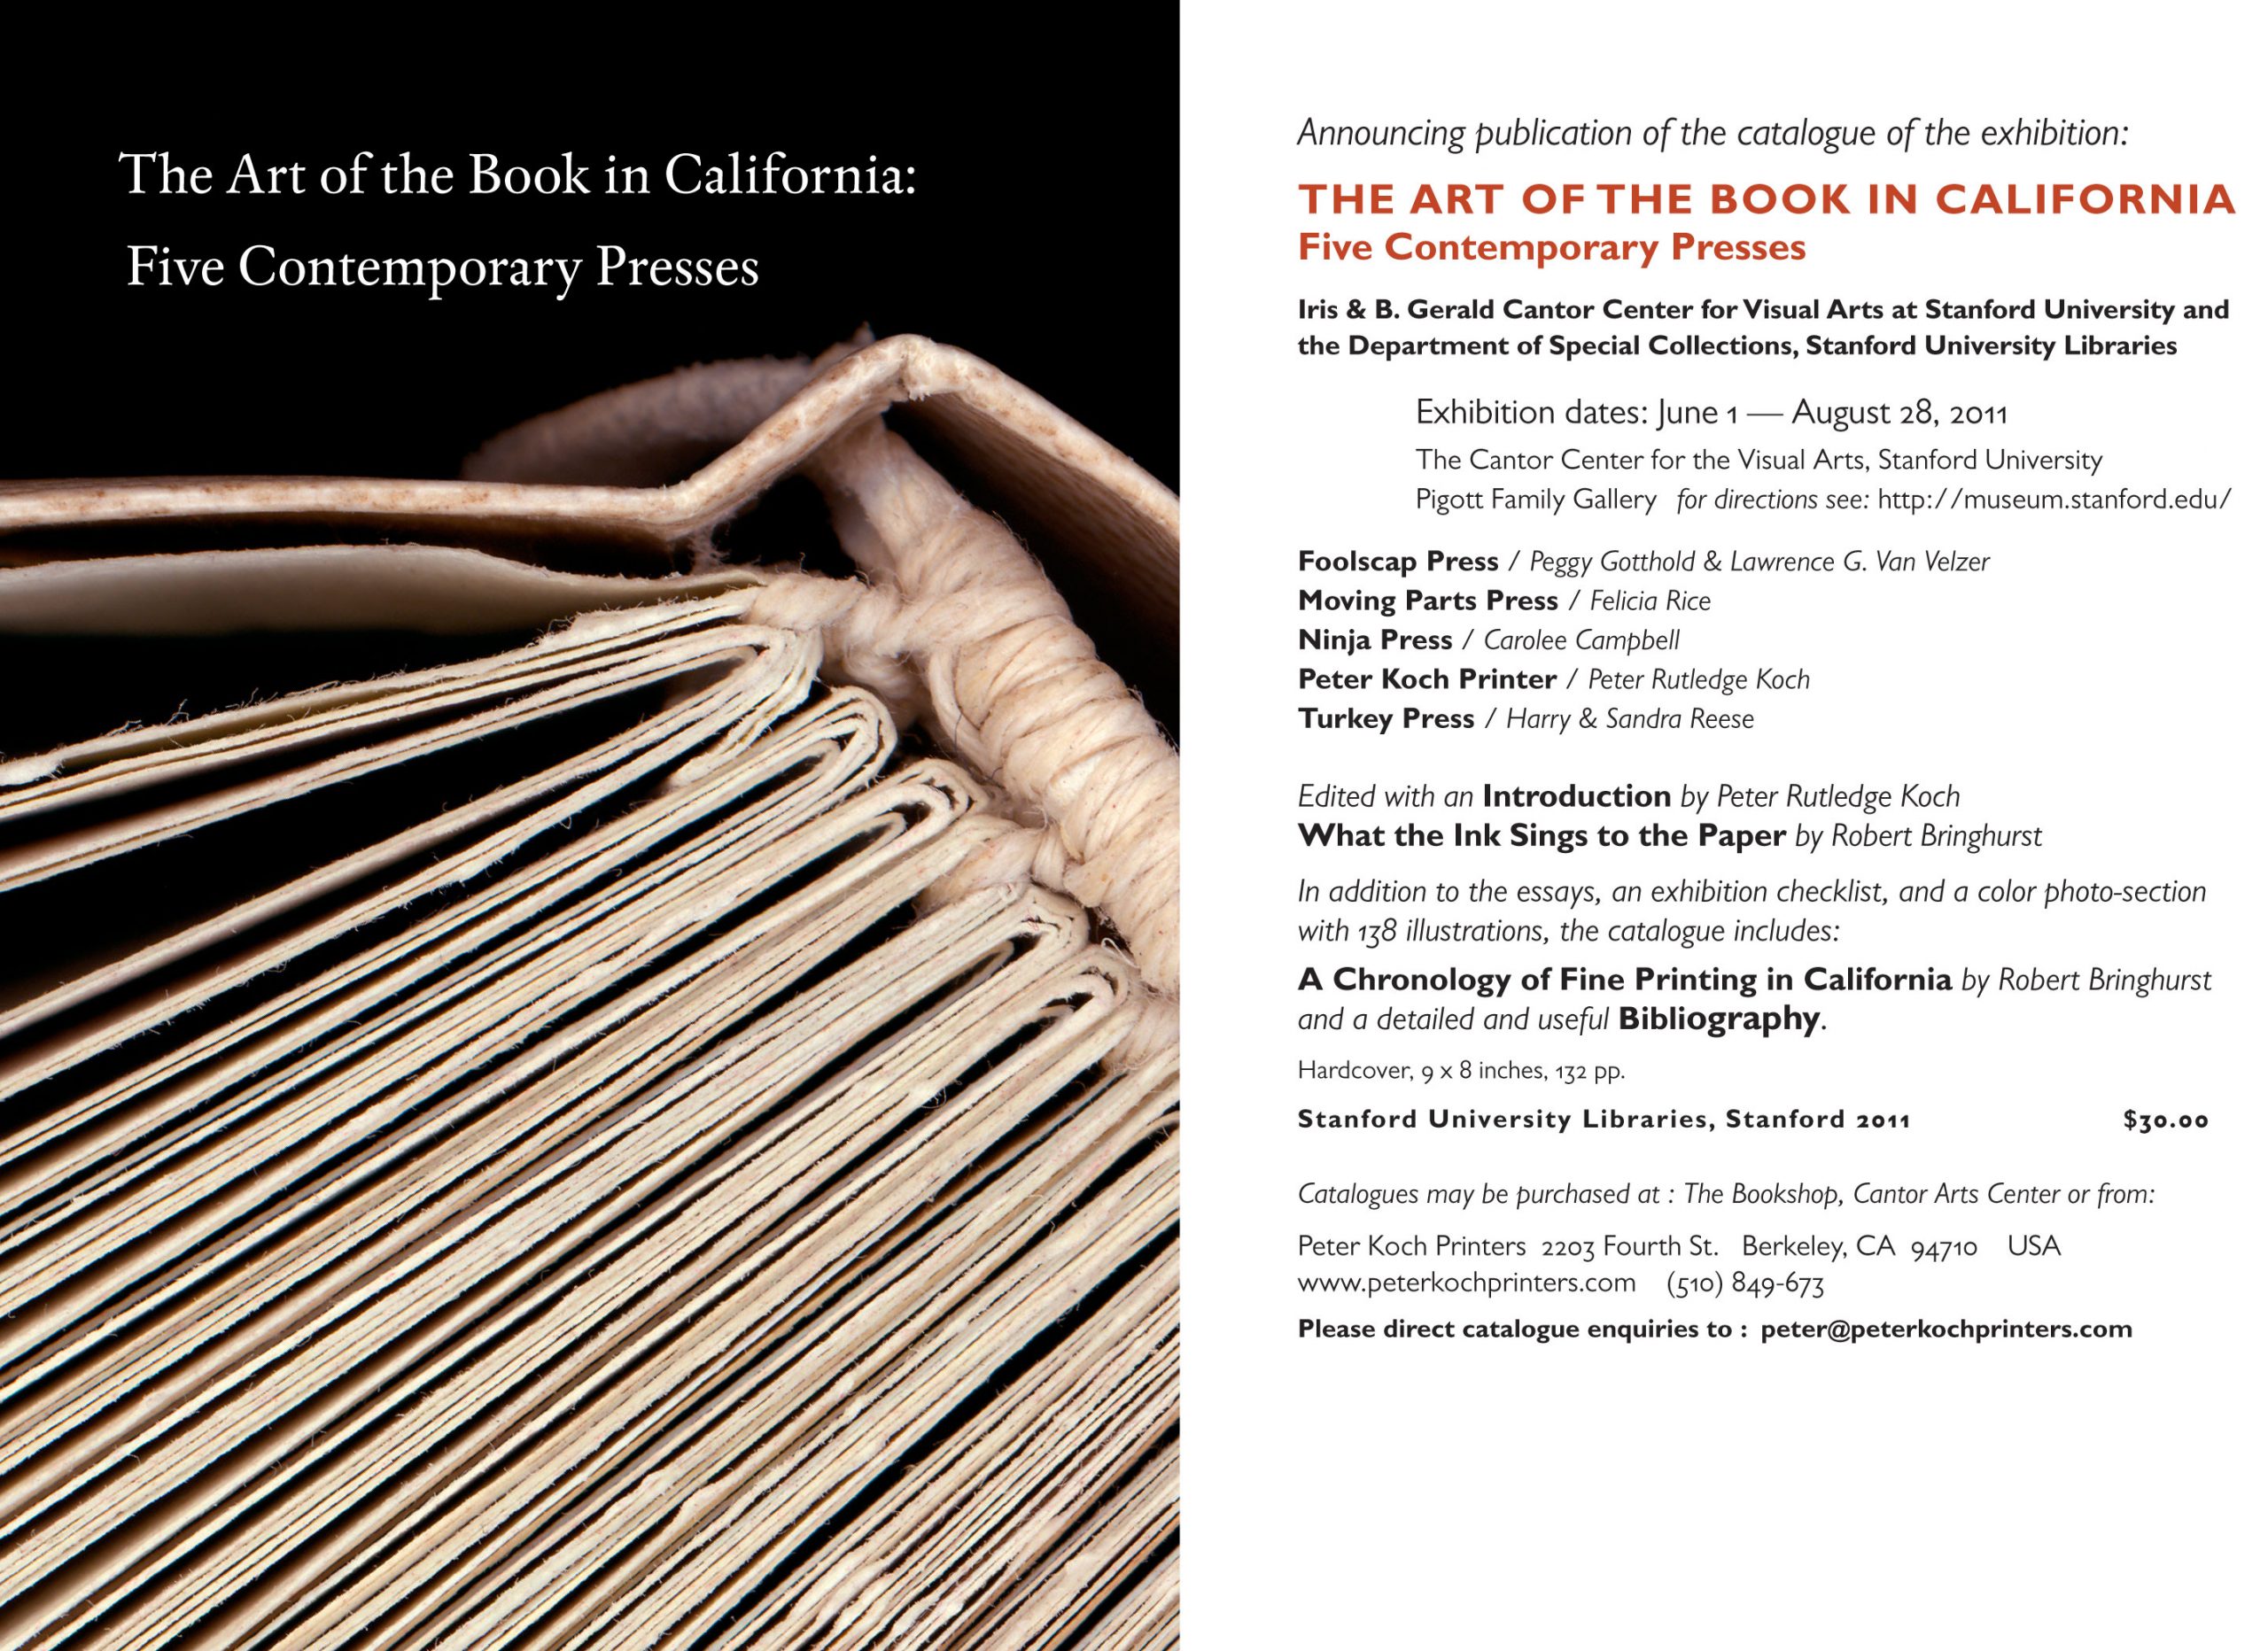 “The Art of the Book in California: Five Contemporary Presses”